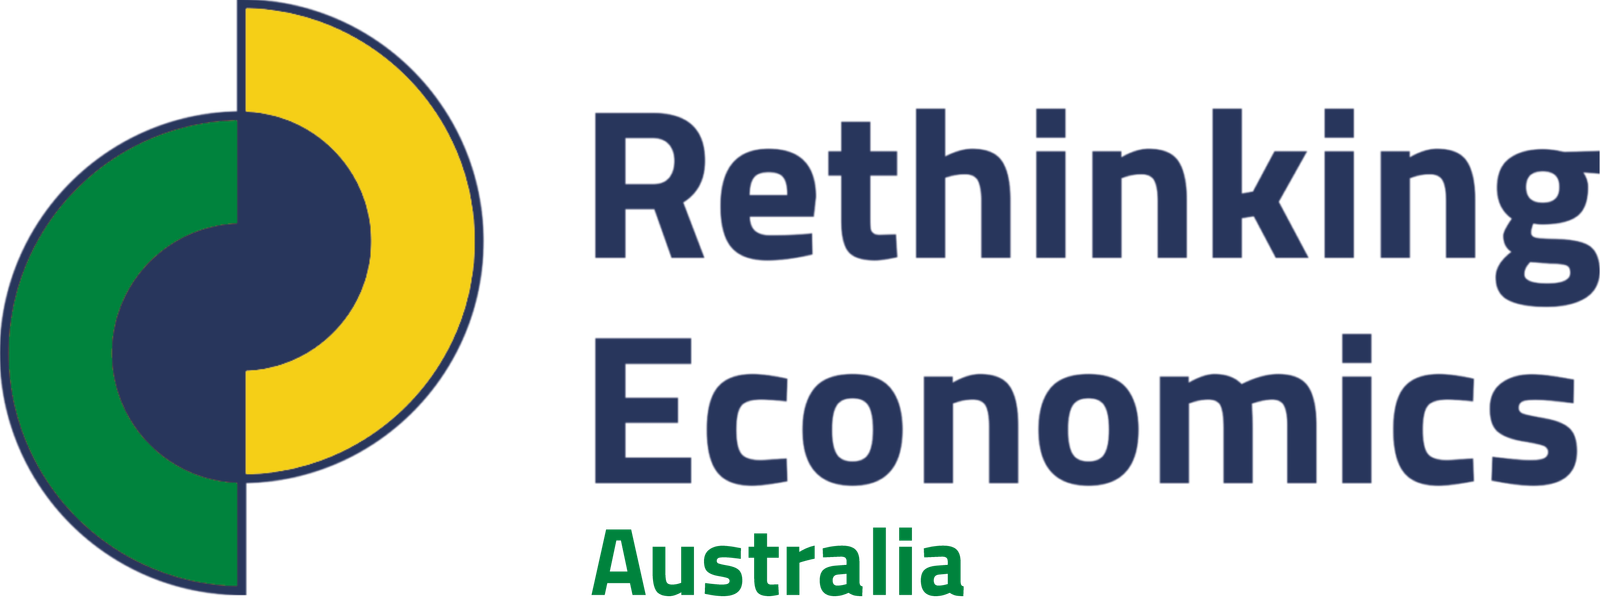 Rethinking Economics Australia